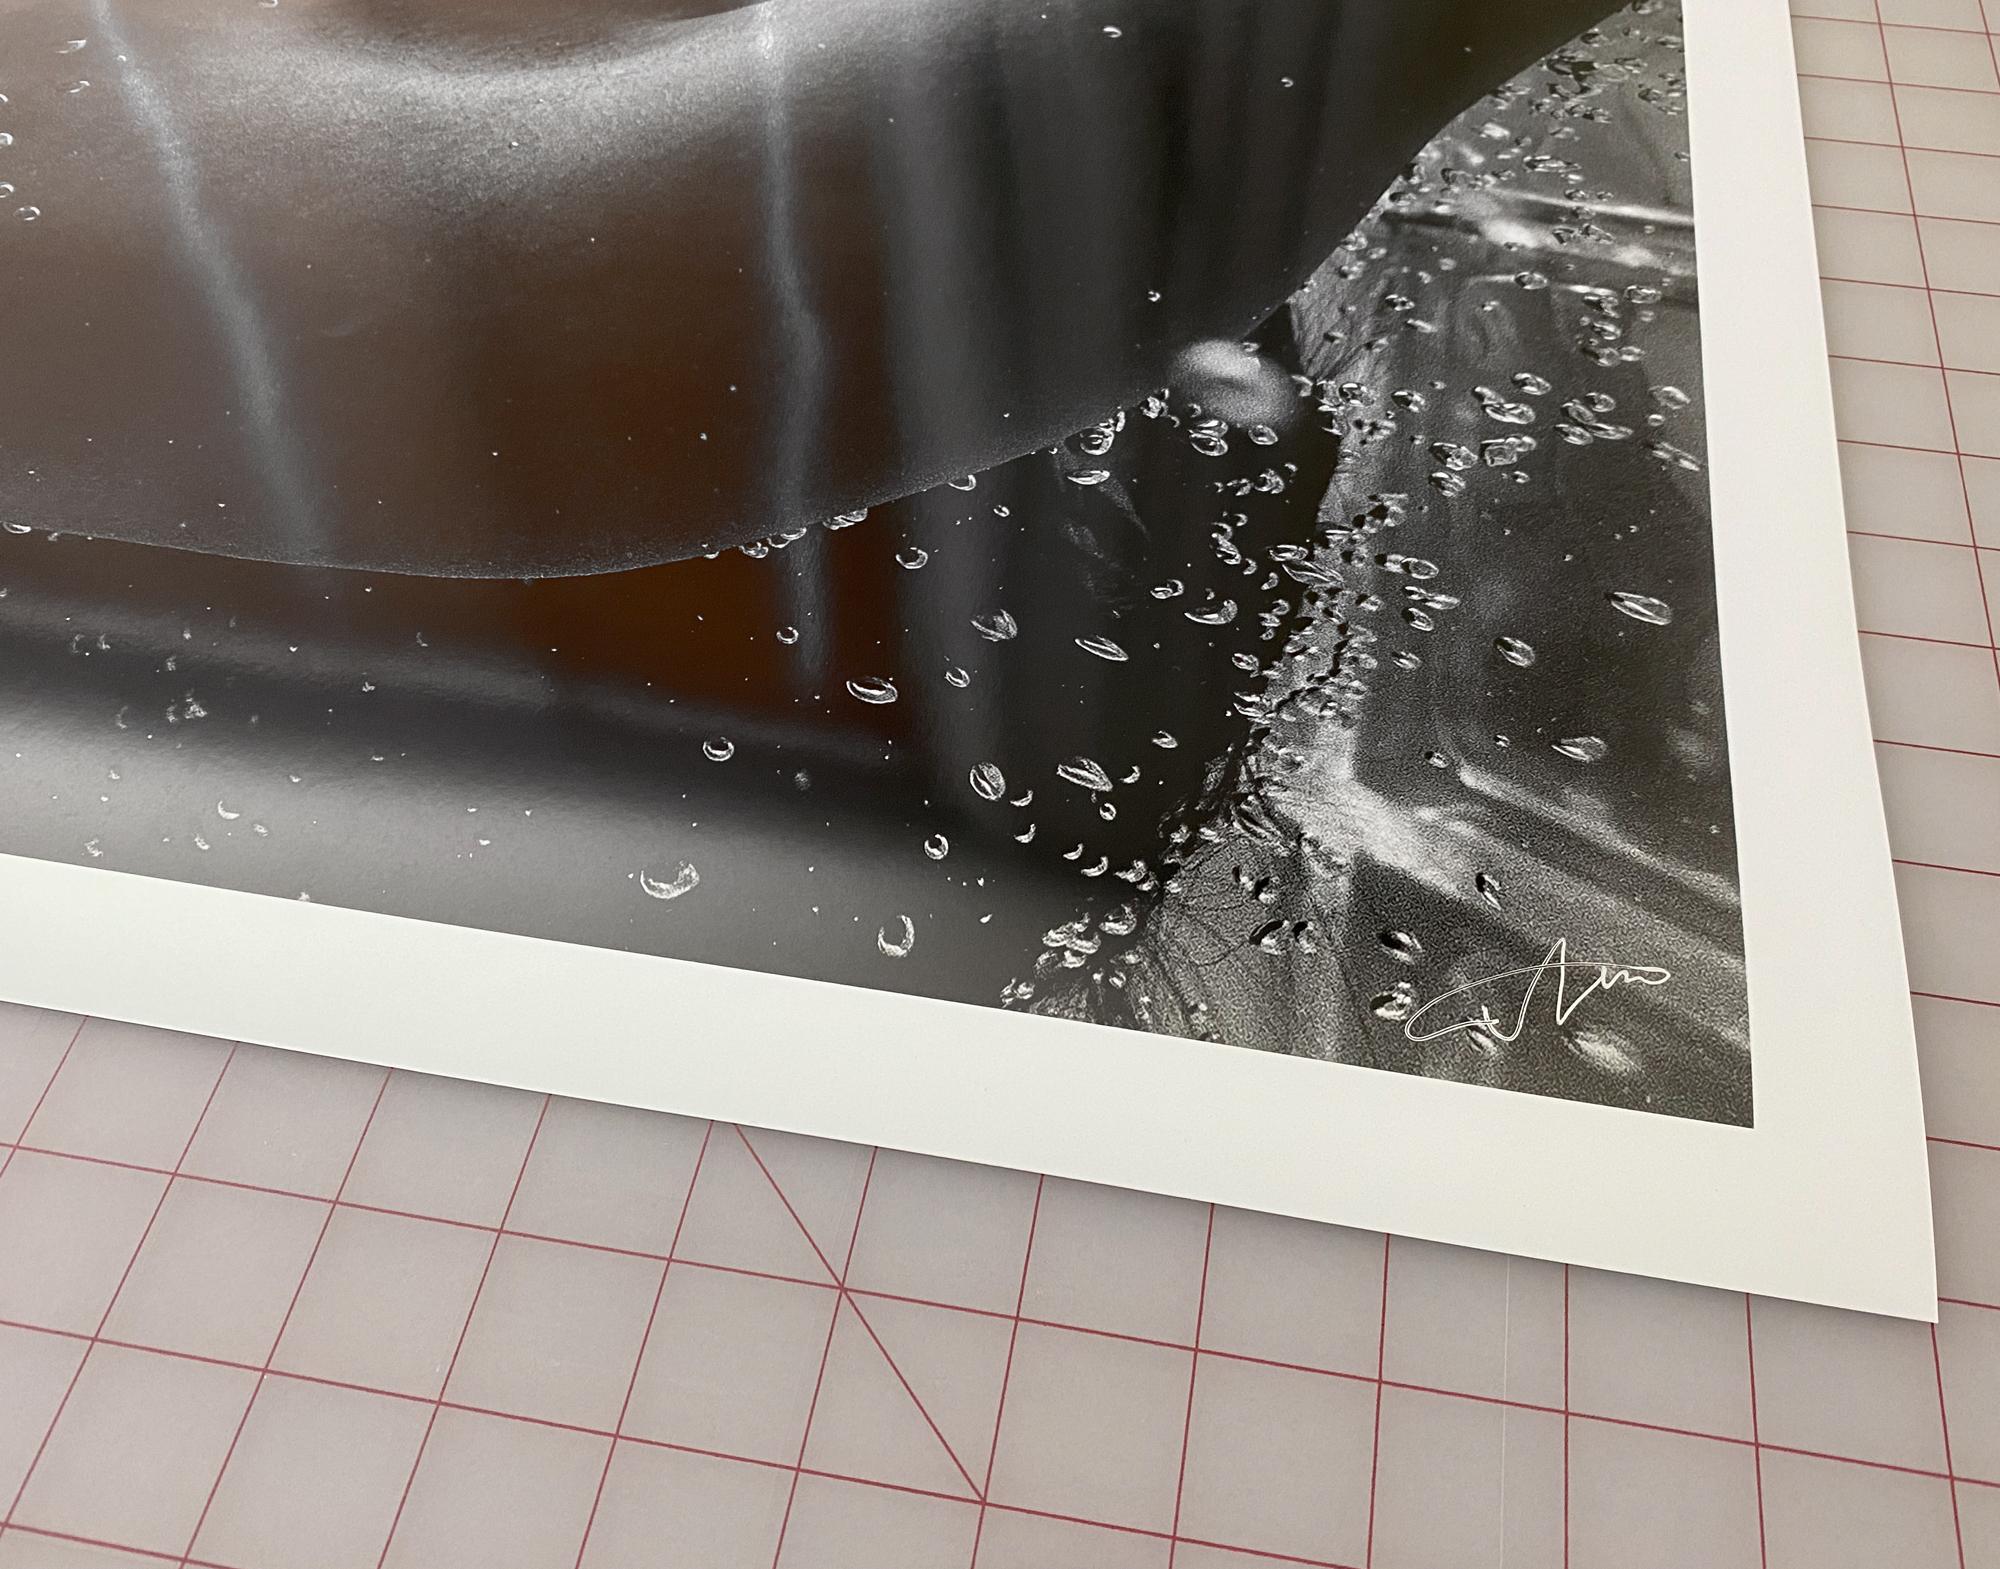 Bubbles - underwater nude b&w photograph - archival pigment print 23 x 35